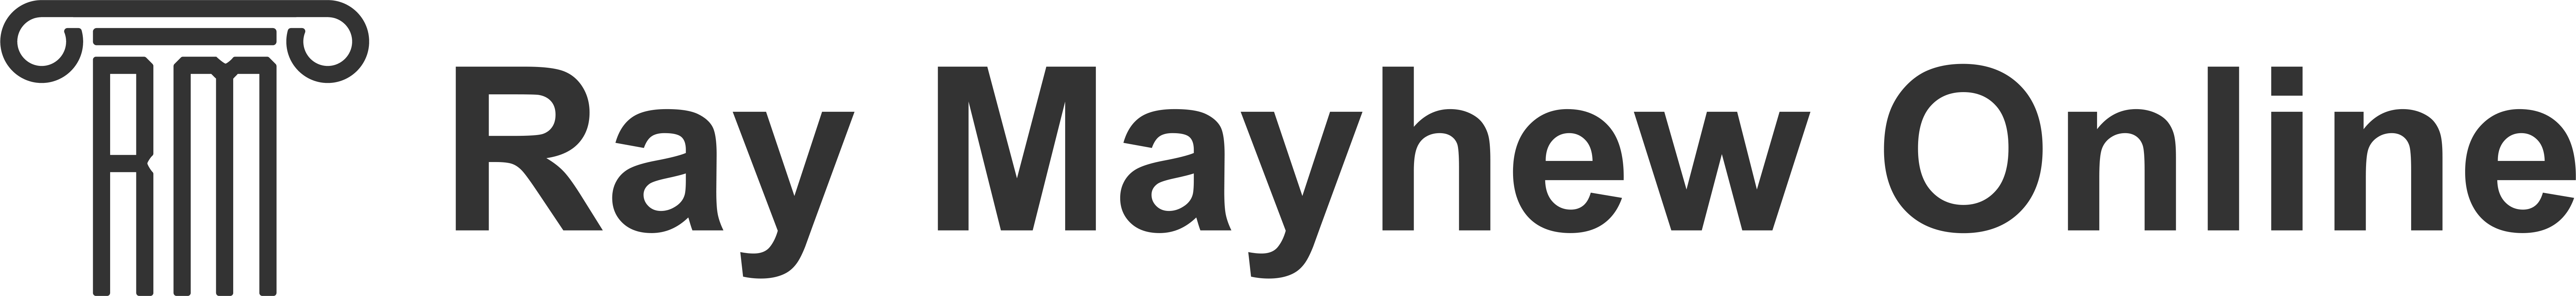 Ray Mayhew Online